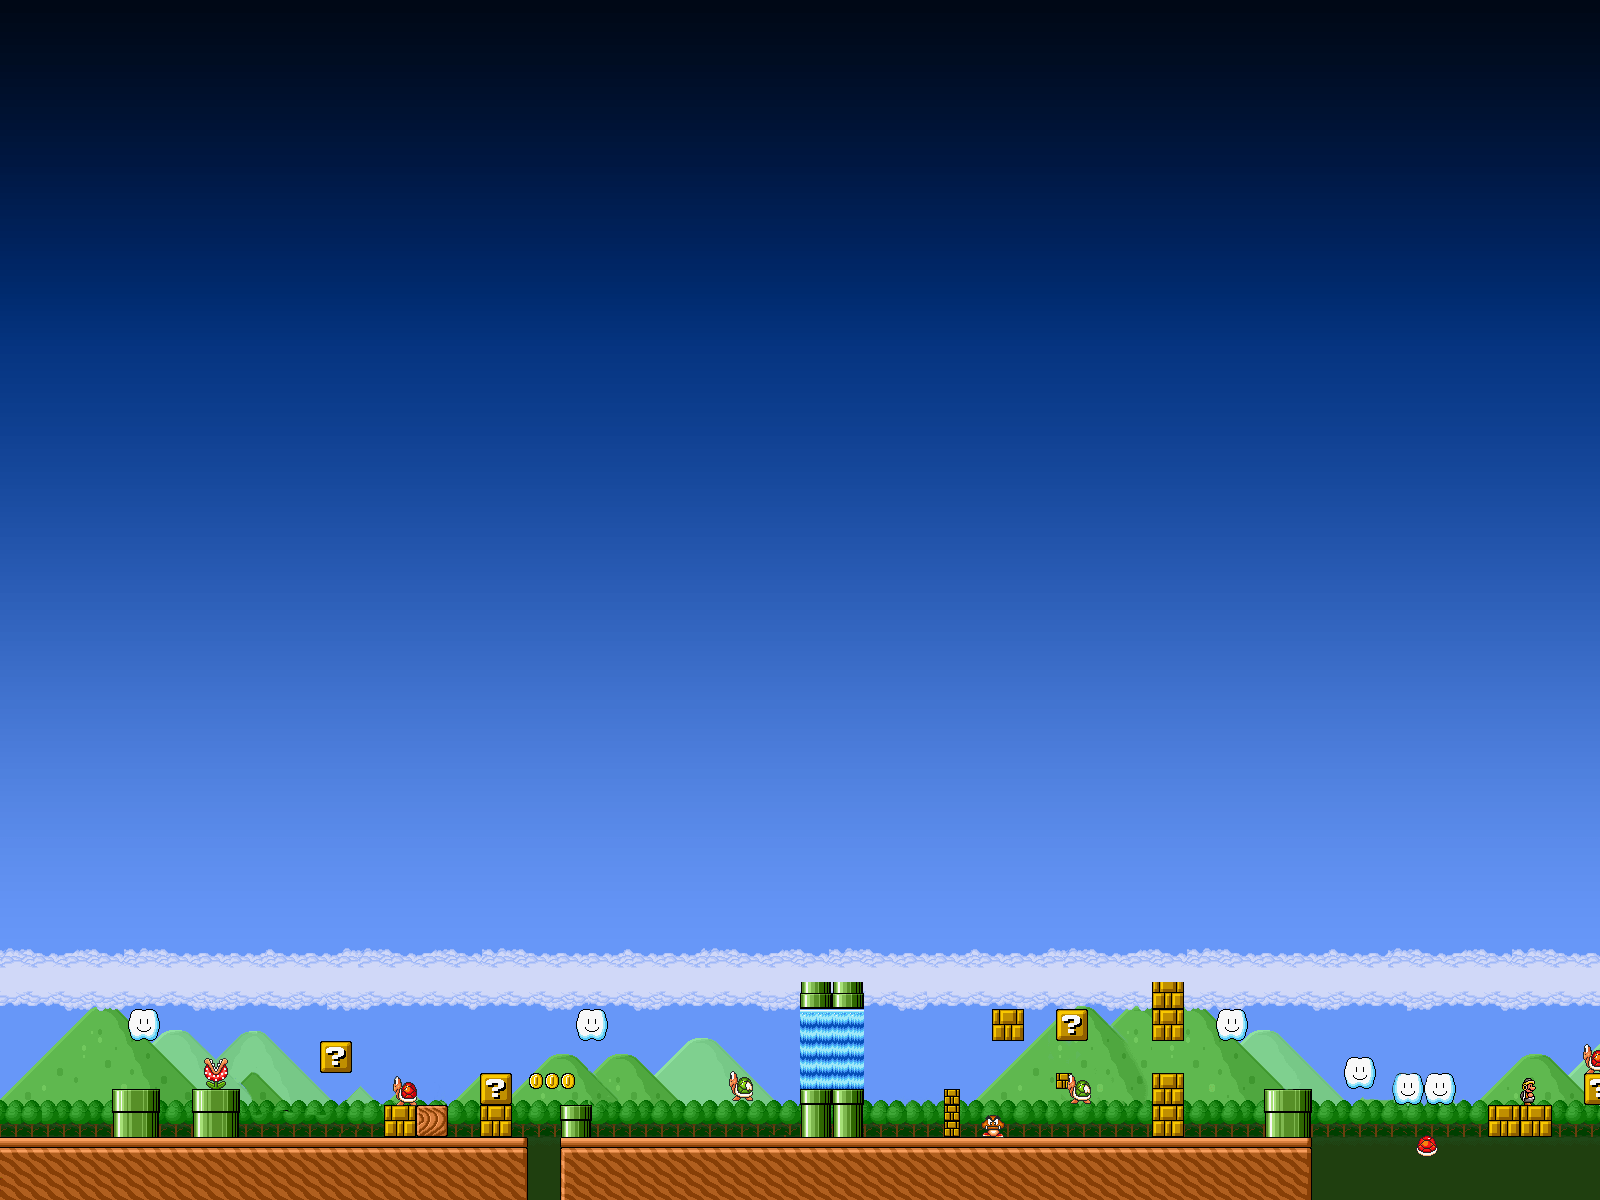 Bit Mario Background Image & Picture